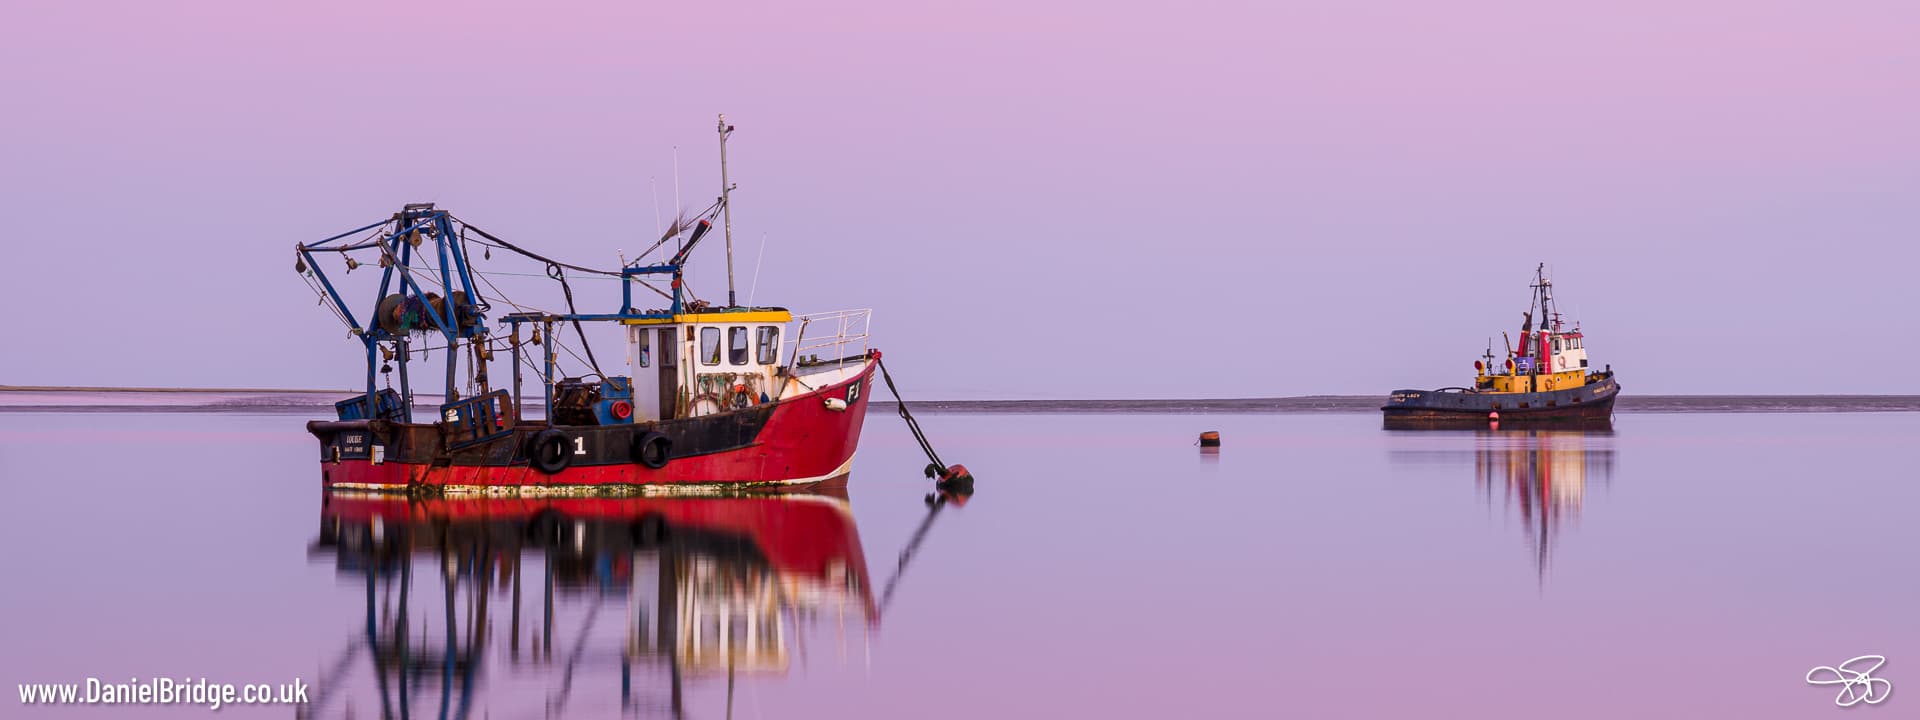 Fishing Boats on still water at dusk